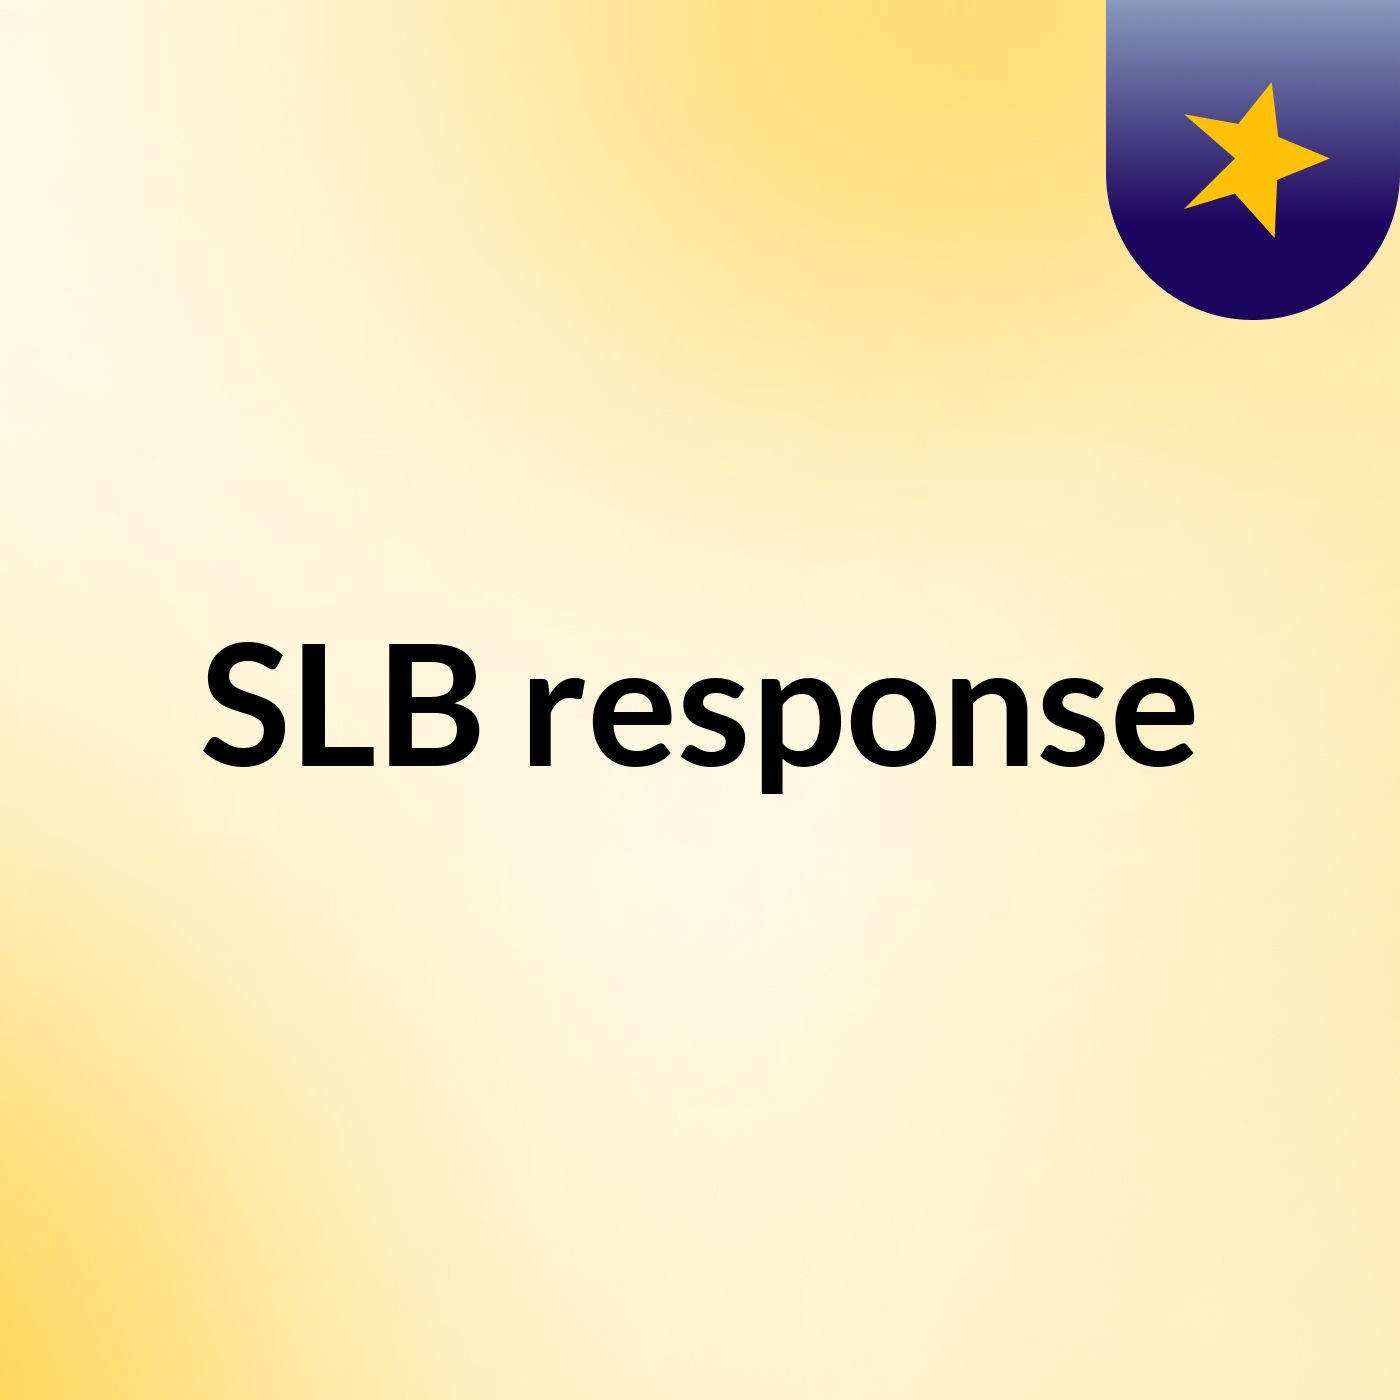 SLB response